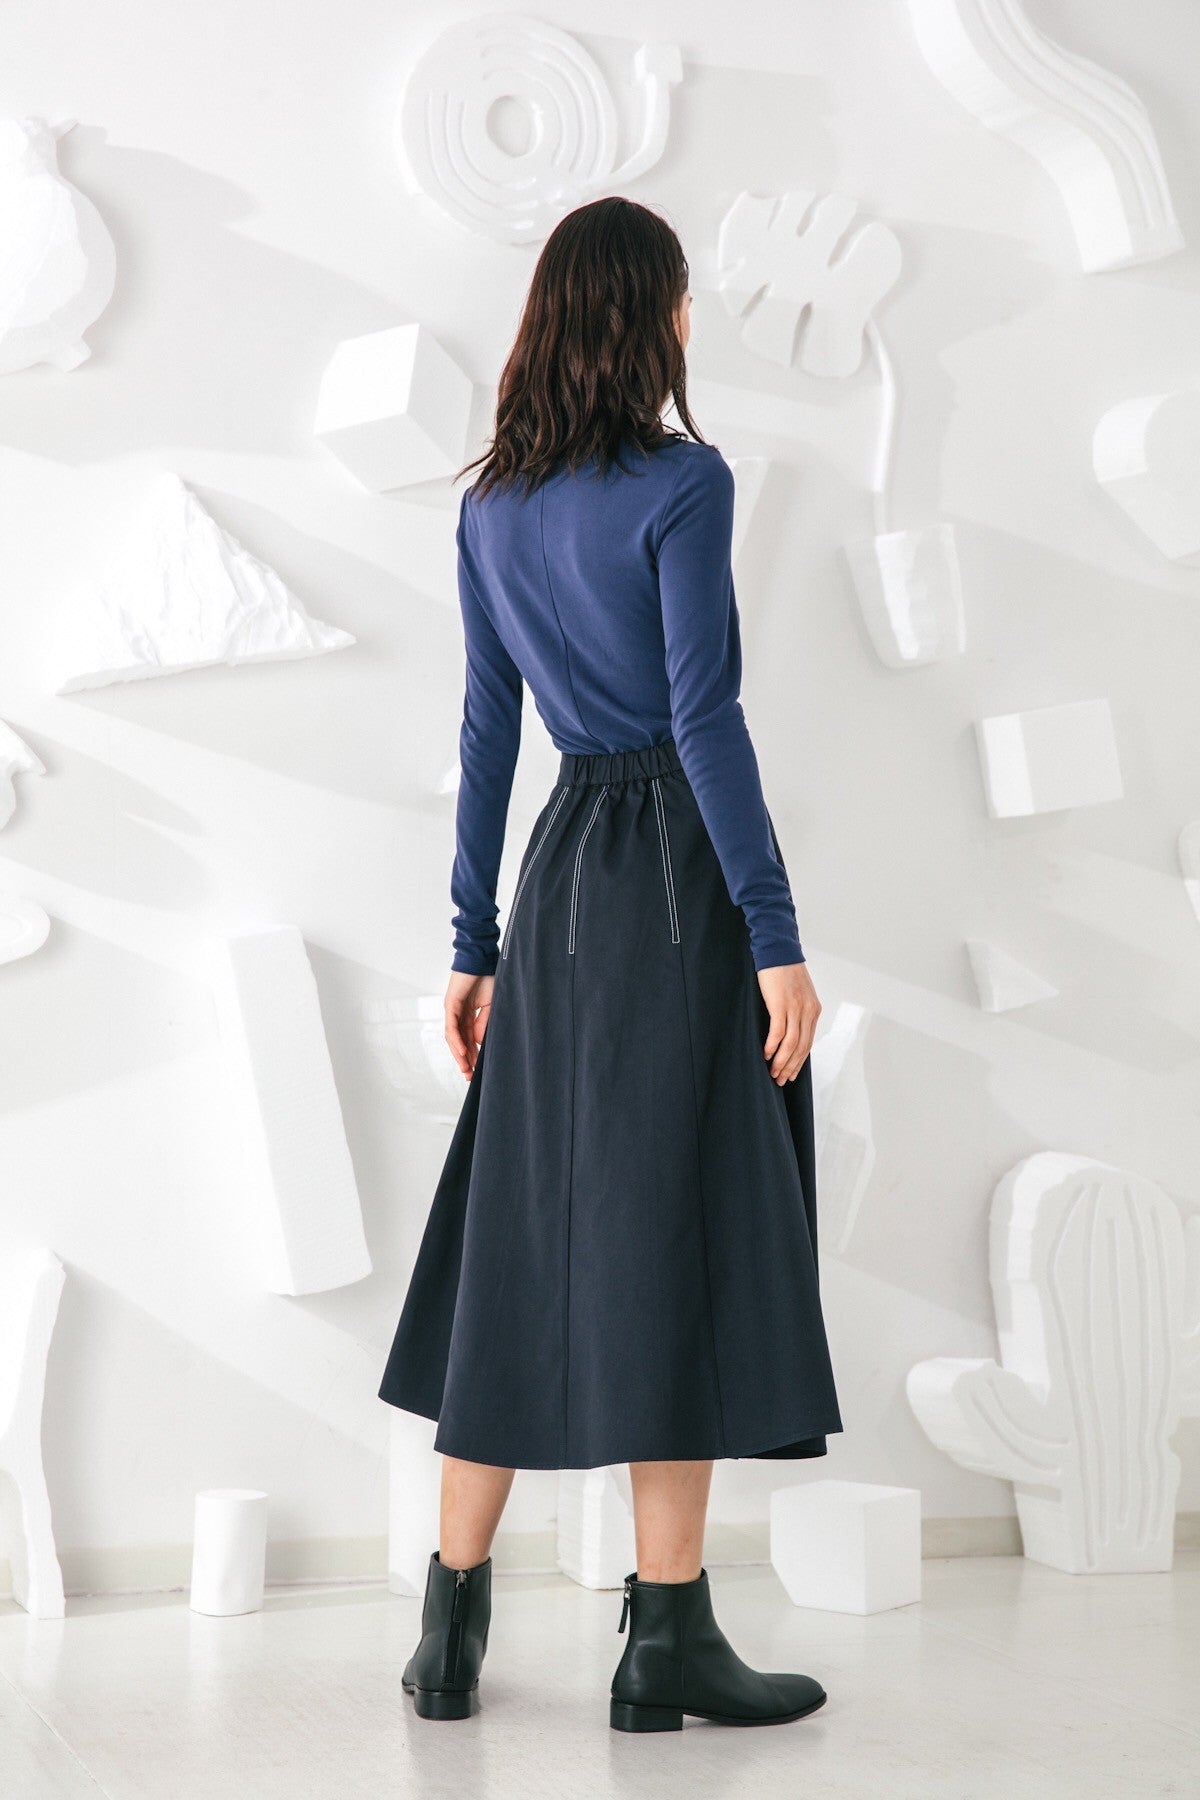 SKYE San Francisco SF shop ethical modern minimalist quality women clothing fashion Jeanne Midi Skirt blue 2